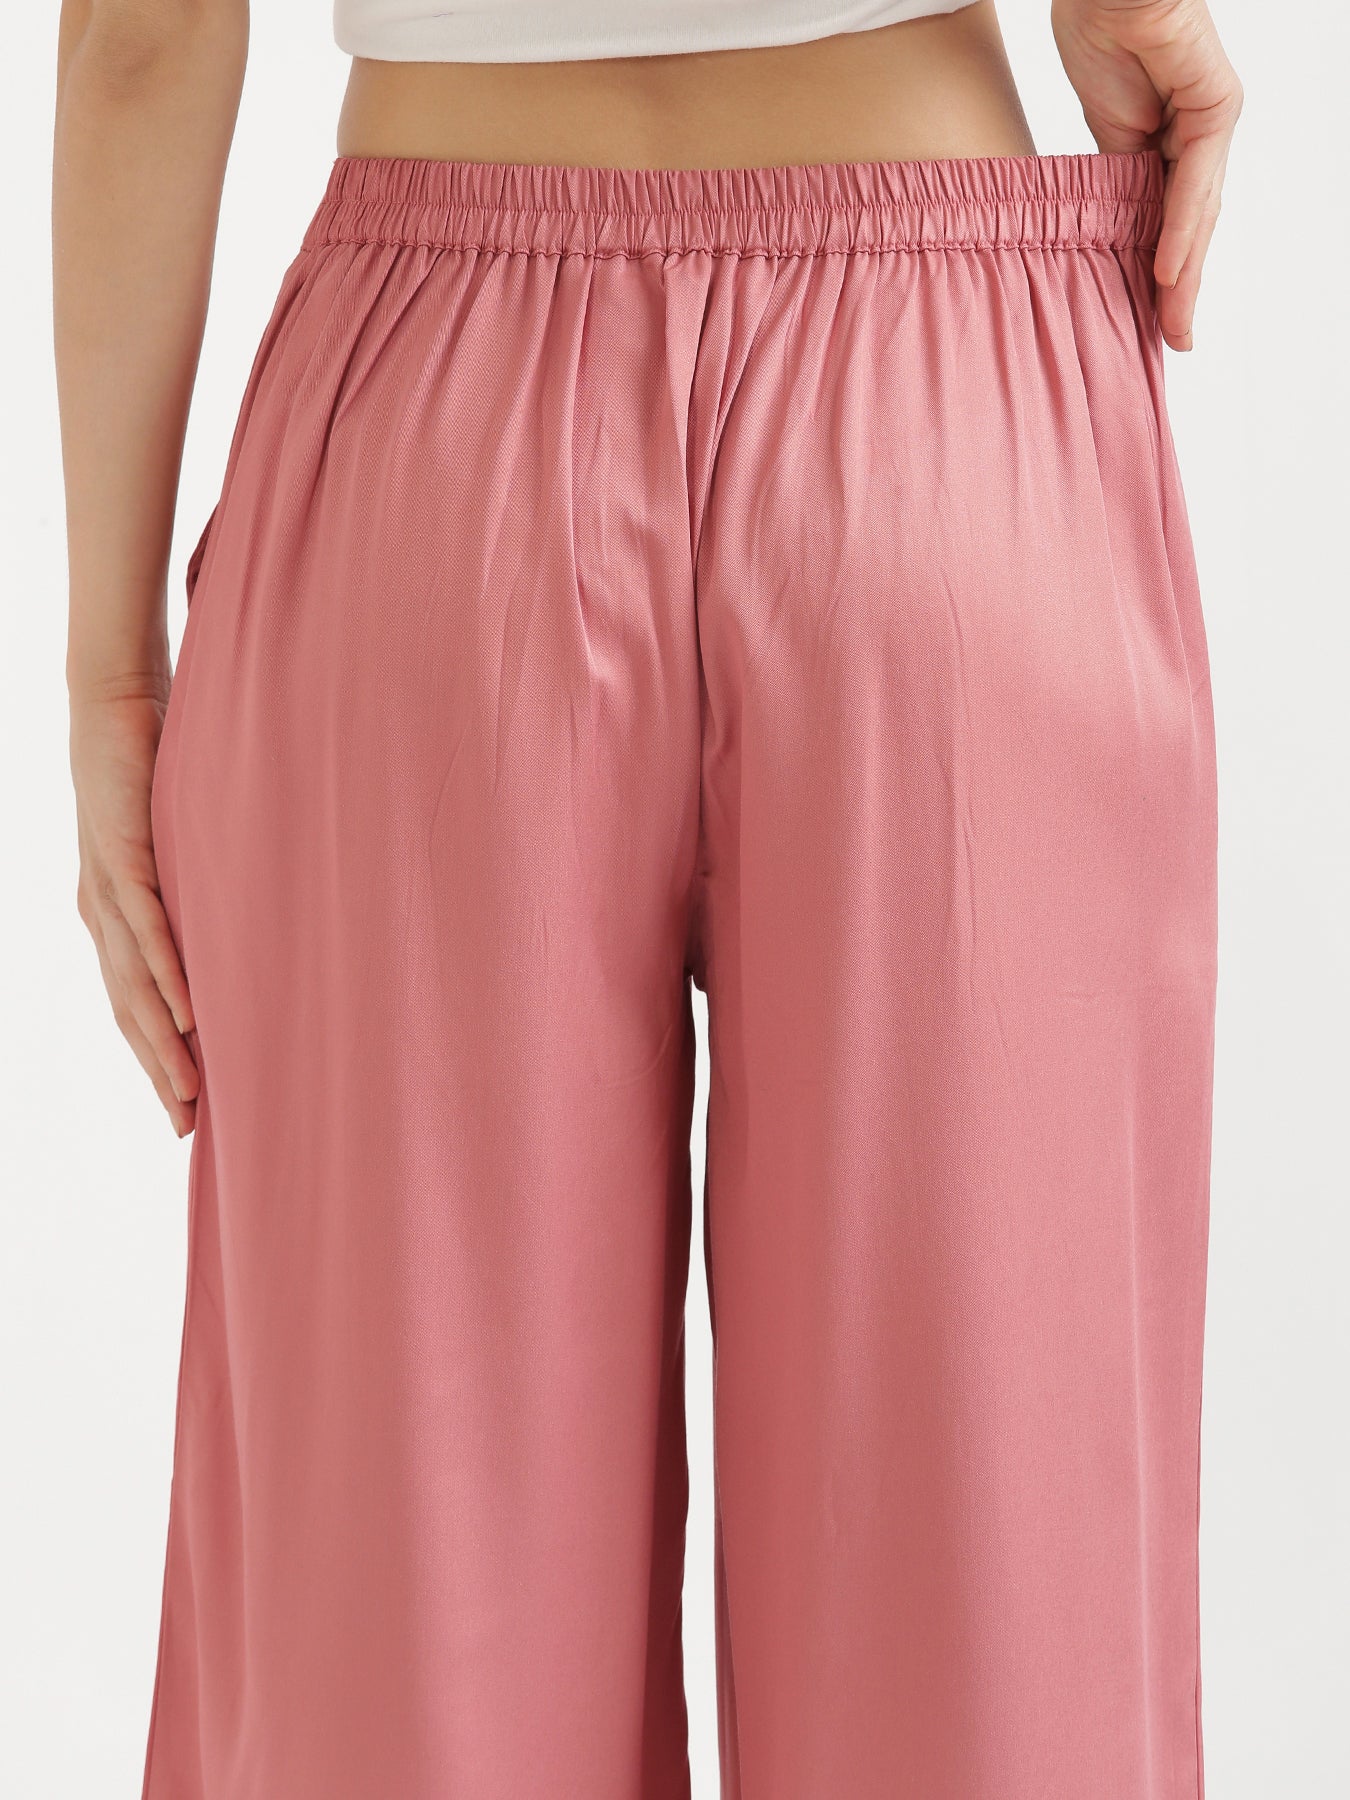 70s Peach Pink Flared Pants - Medium, 28